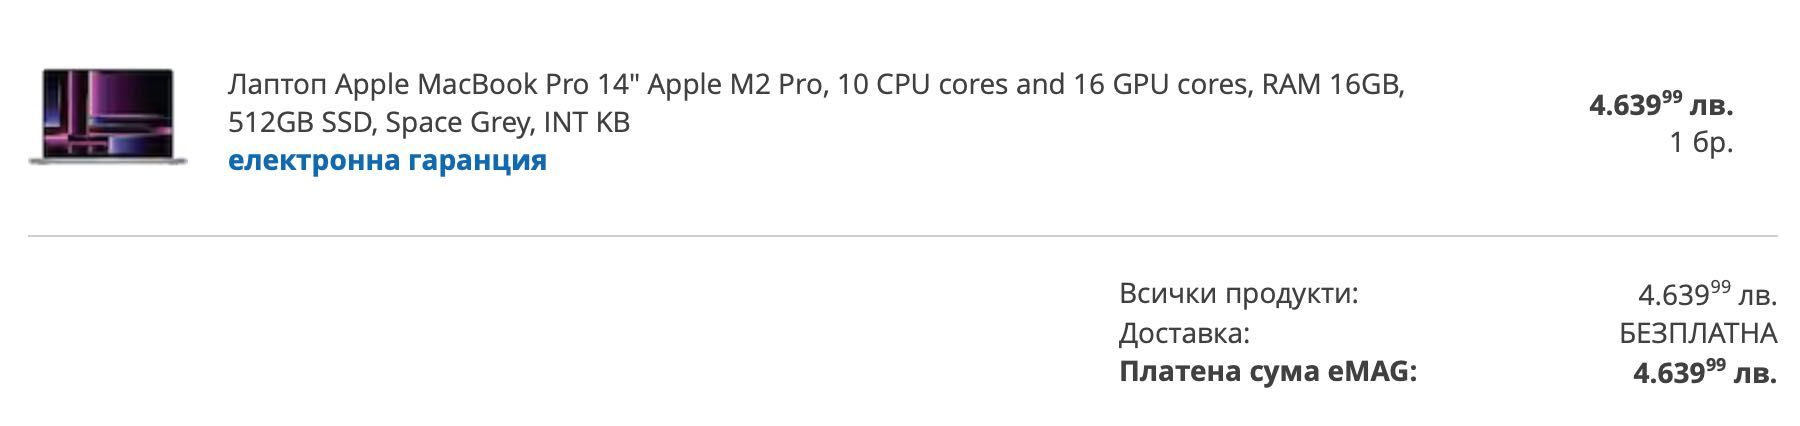 MacBook Pro M2 pro chip, 512GB SSD, 16GB RAM